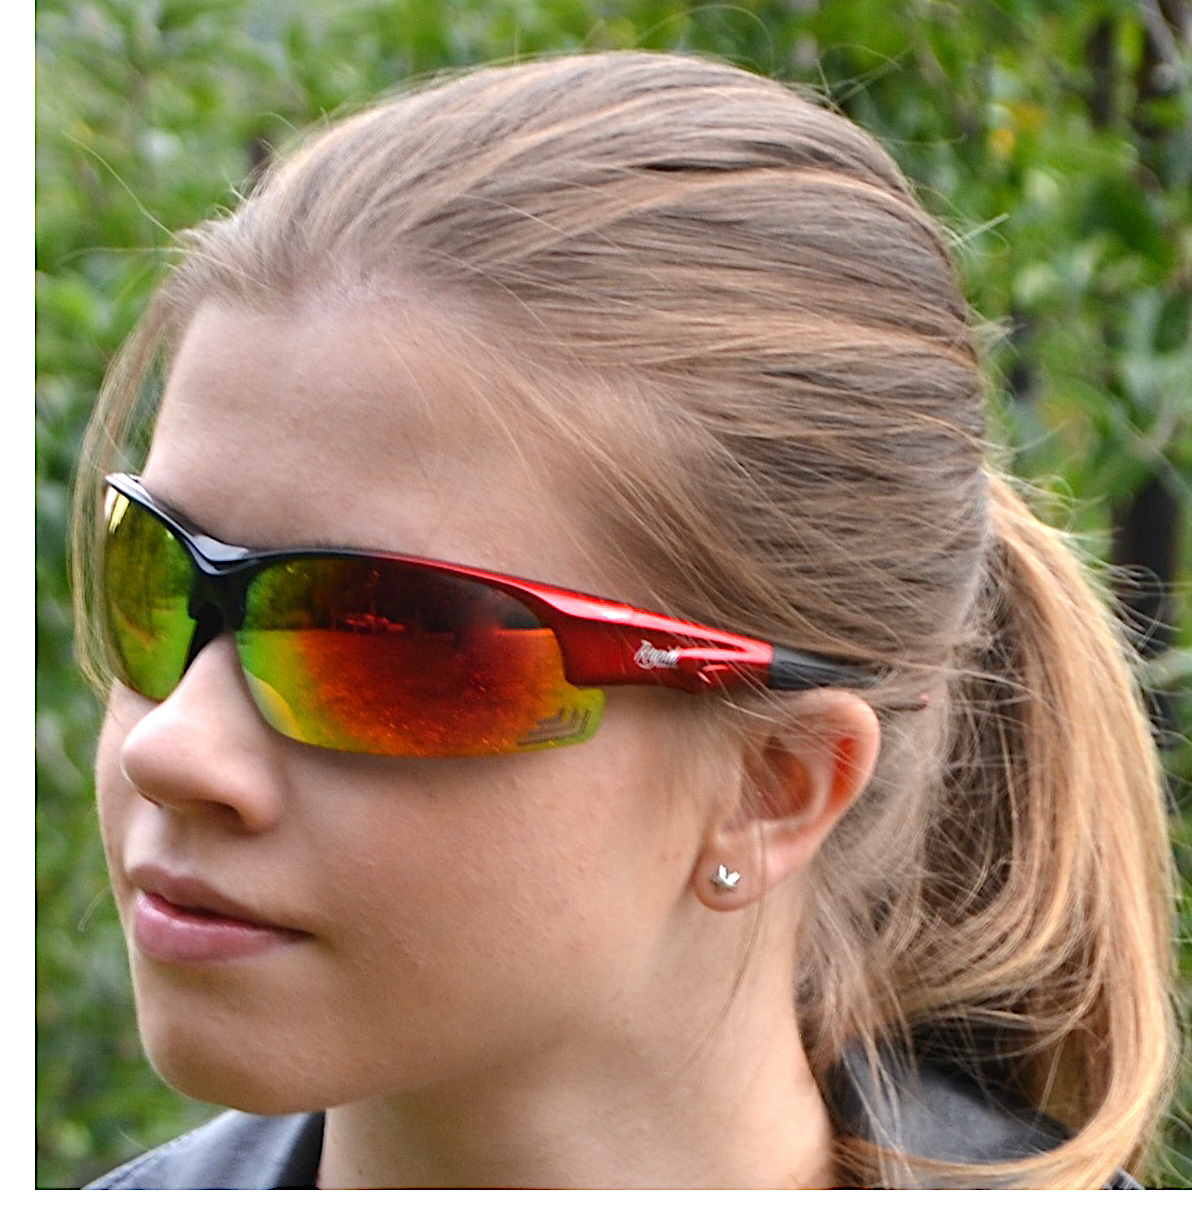 Red wraparound sports sunglasses